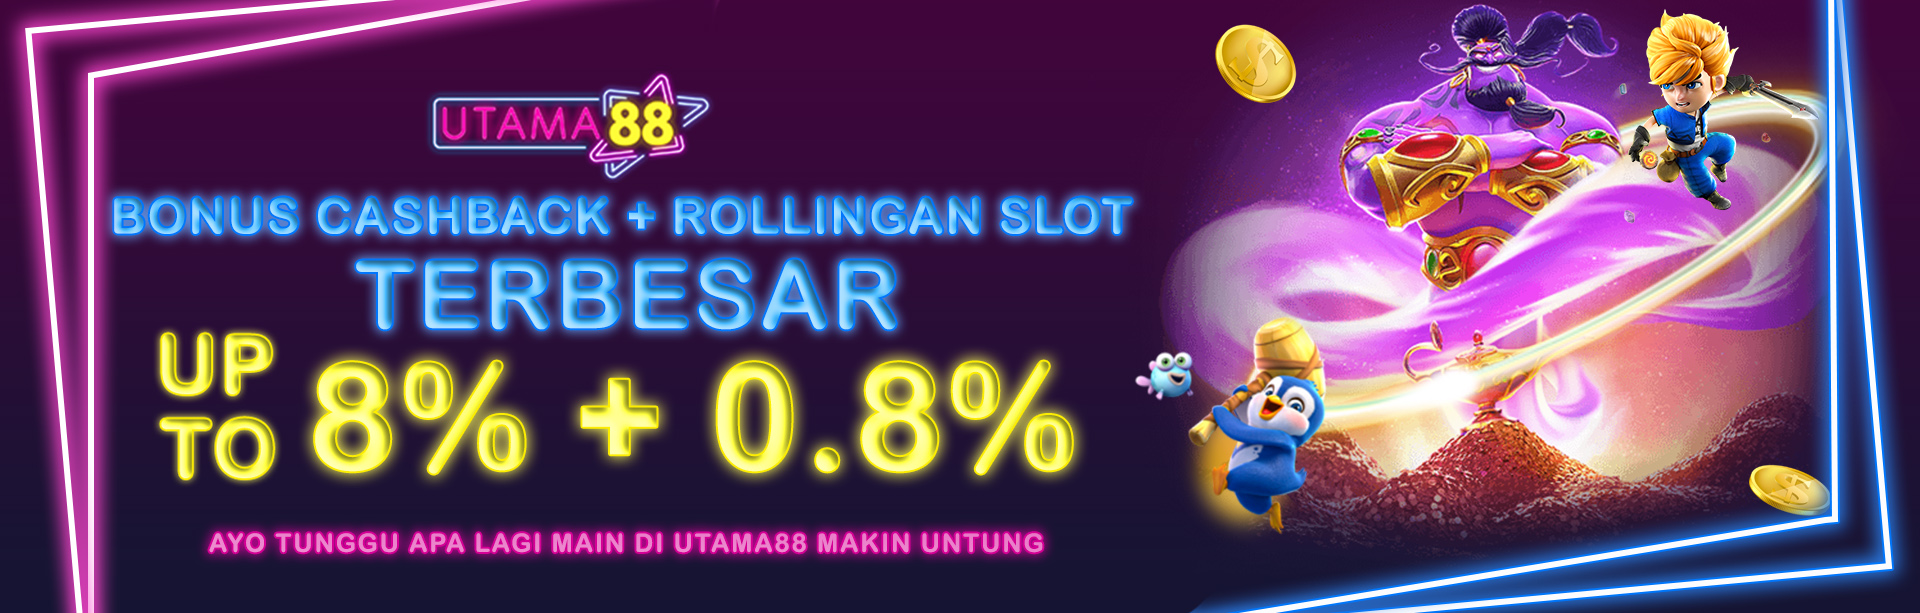 Bonus rollingan slot 0.8% + 8%